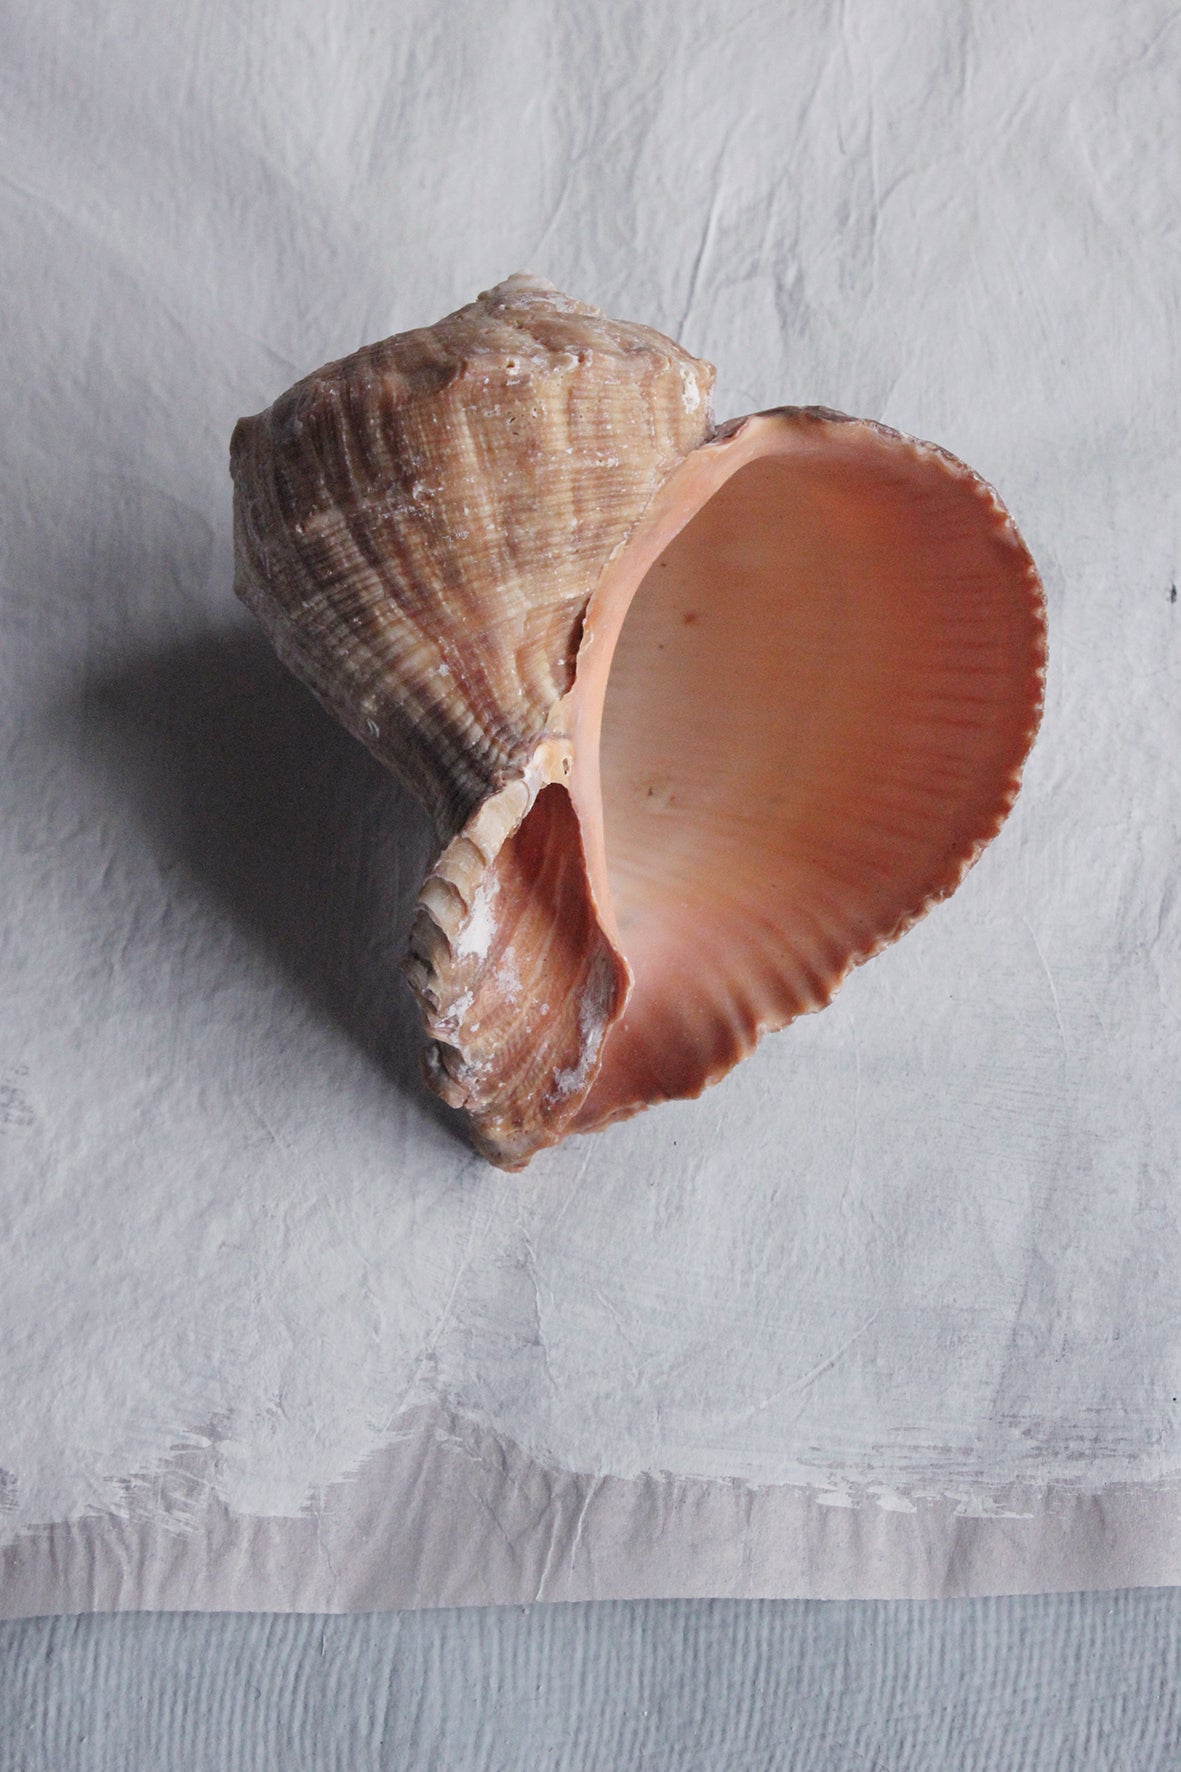 Precious old still life sea shell - two